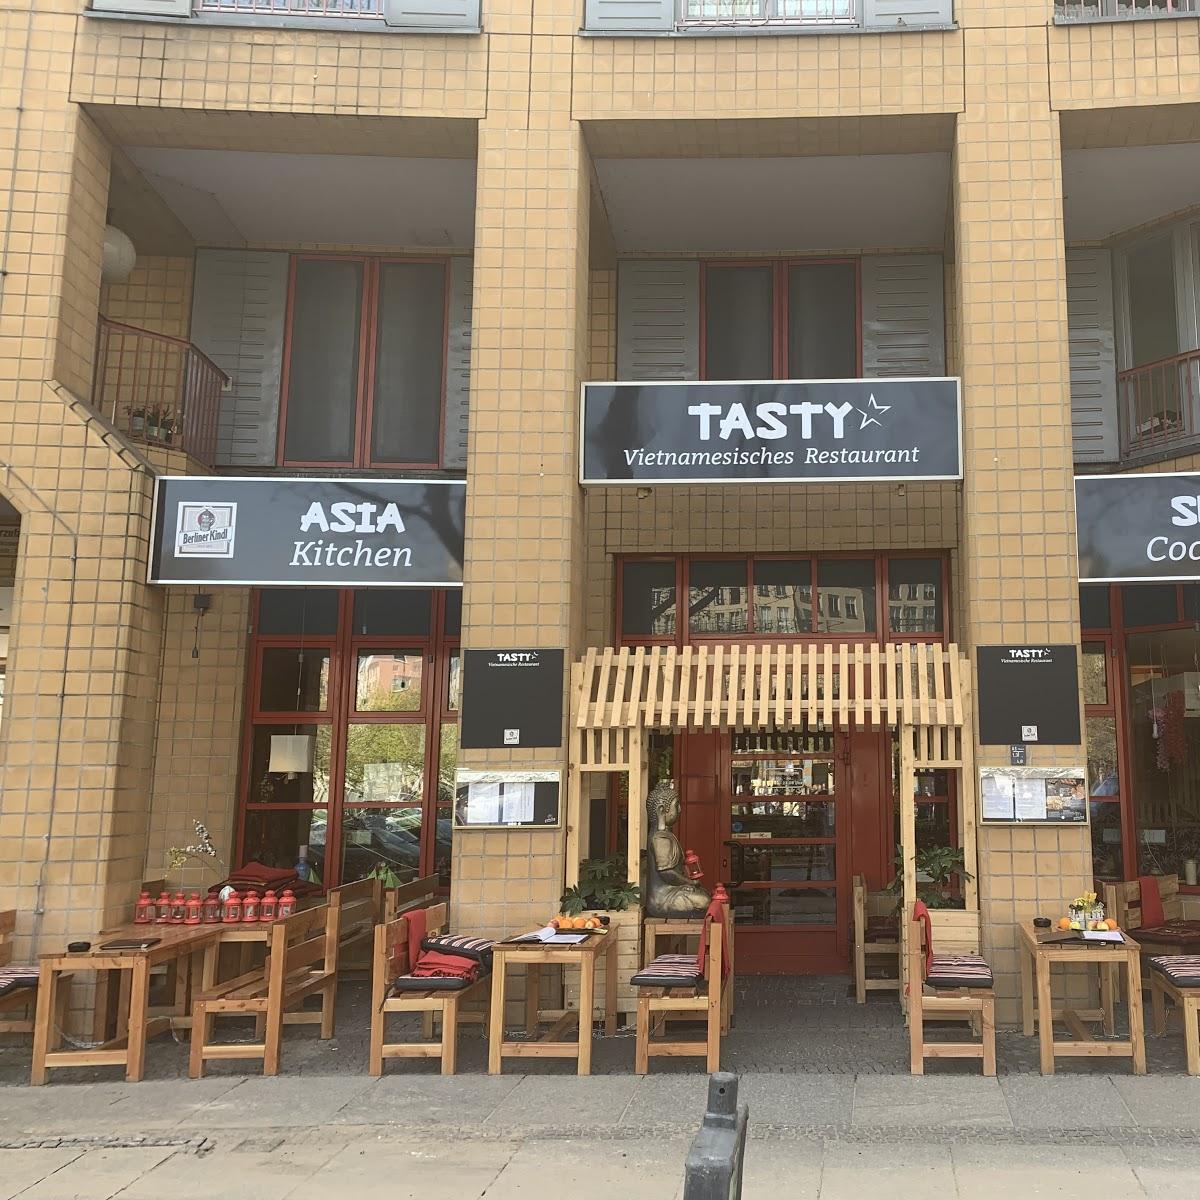 Restaurant "Tasty Cuisine" in Berlin